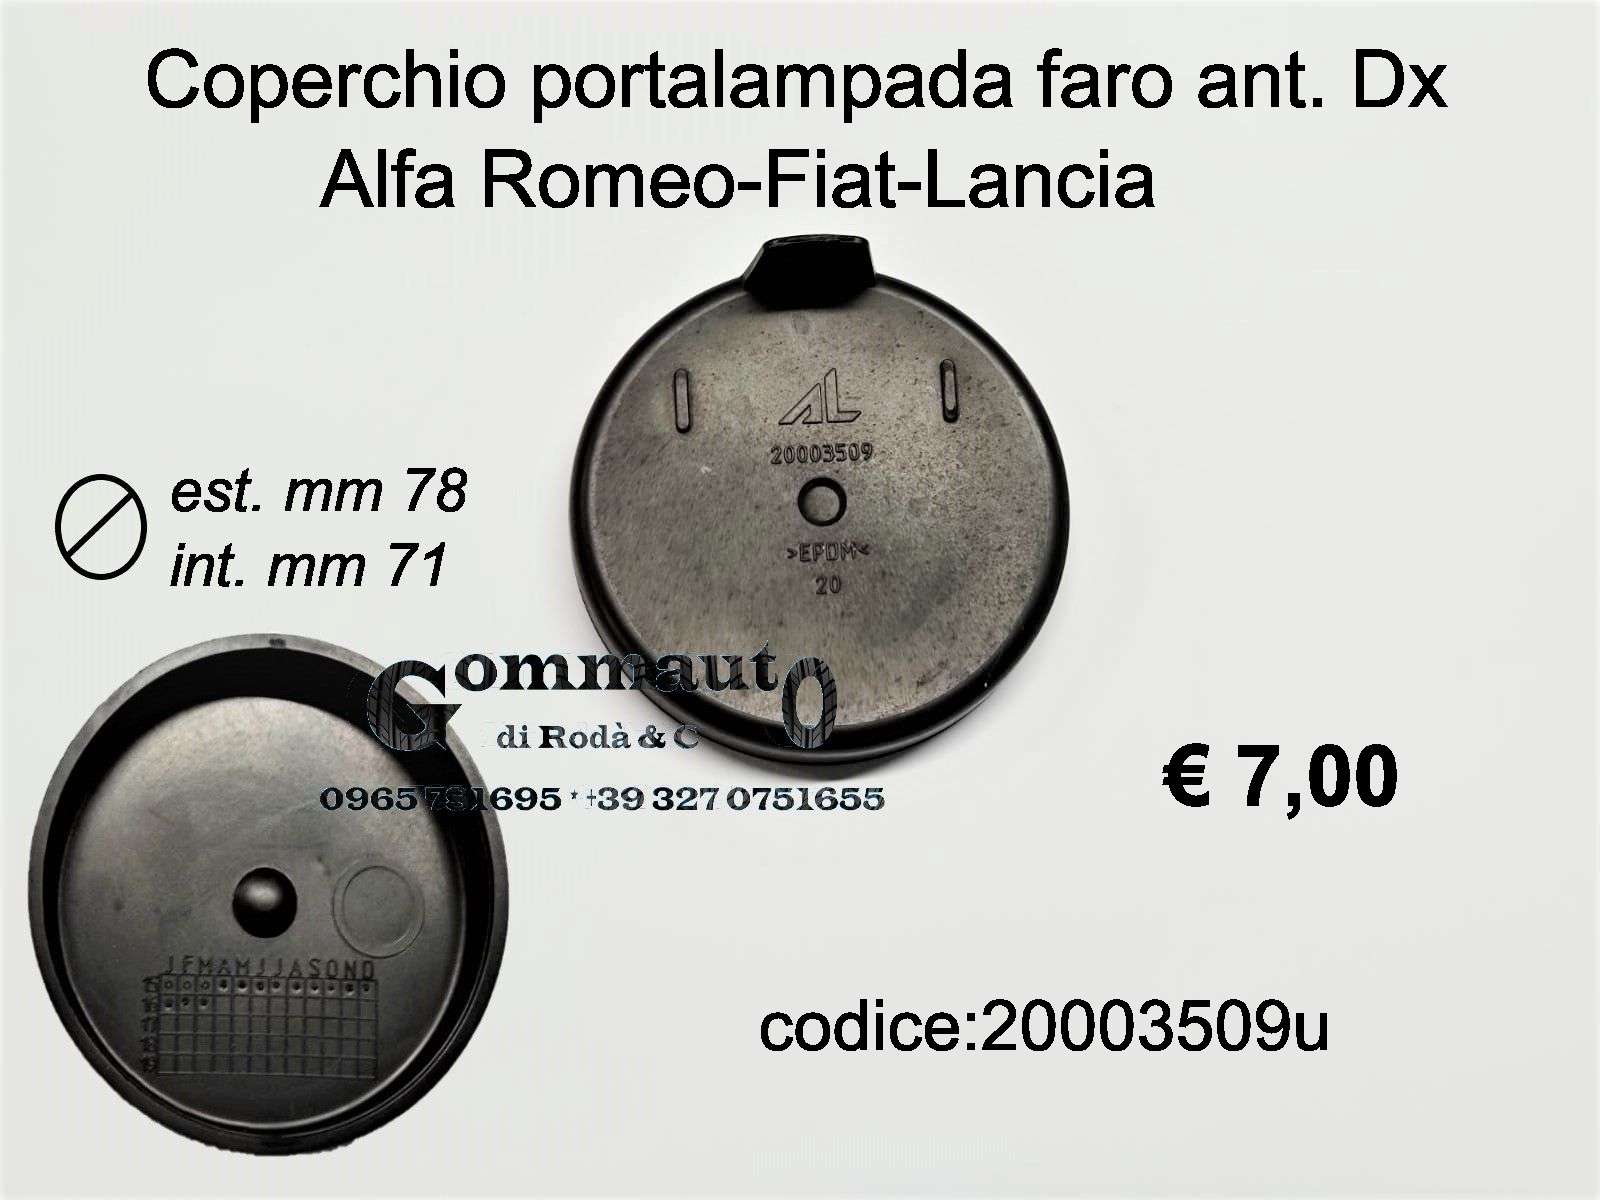 Coperchio portalampada faro Dx Alfa Romeo-Fiat-Lancia